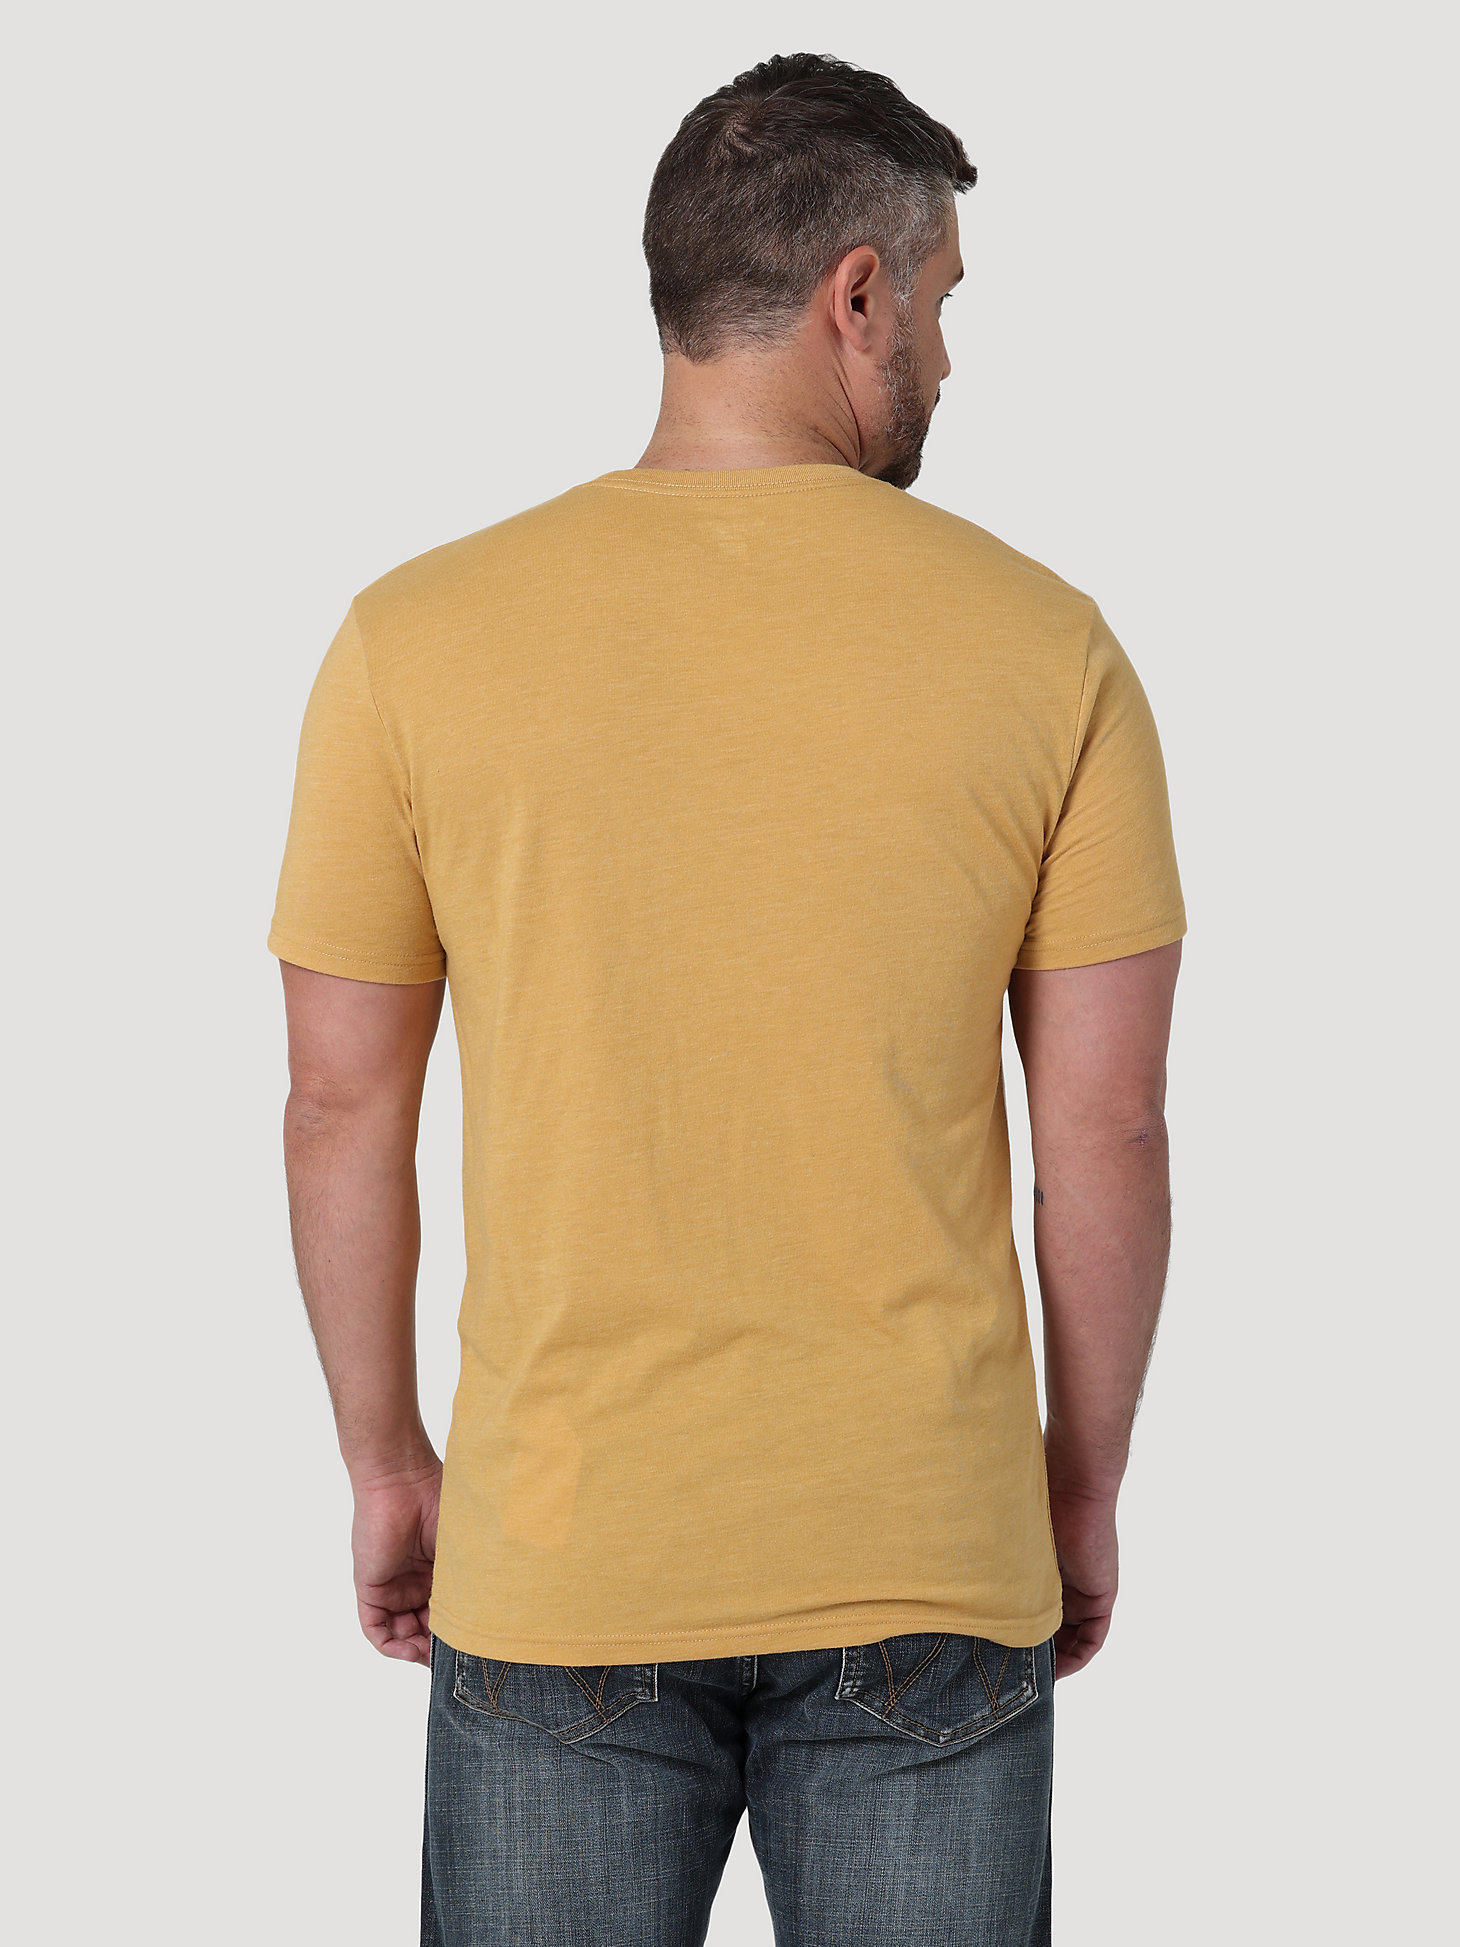 Men's George Strait Short Sleeve Graphic T-Shirt in Pale Gold Heather alternative view 1